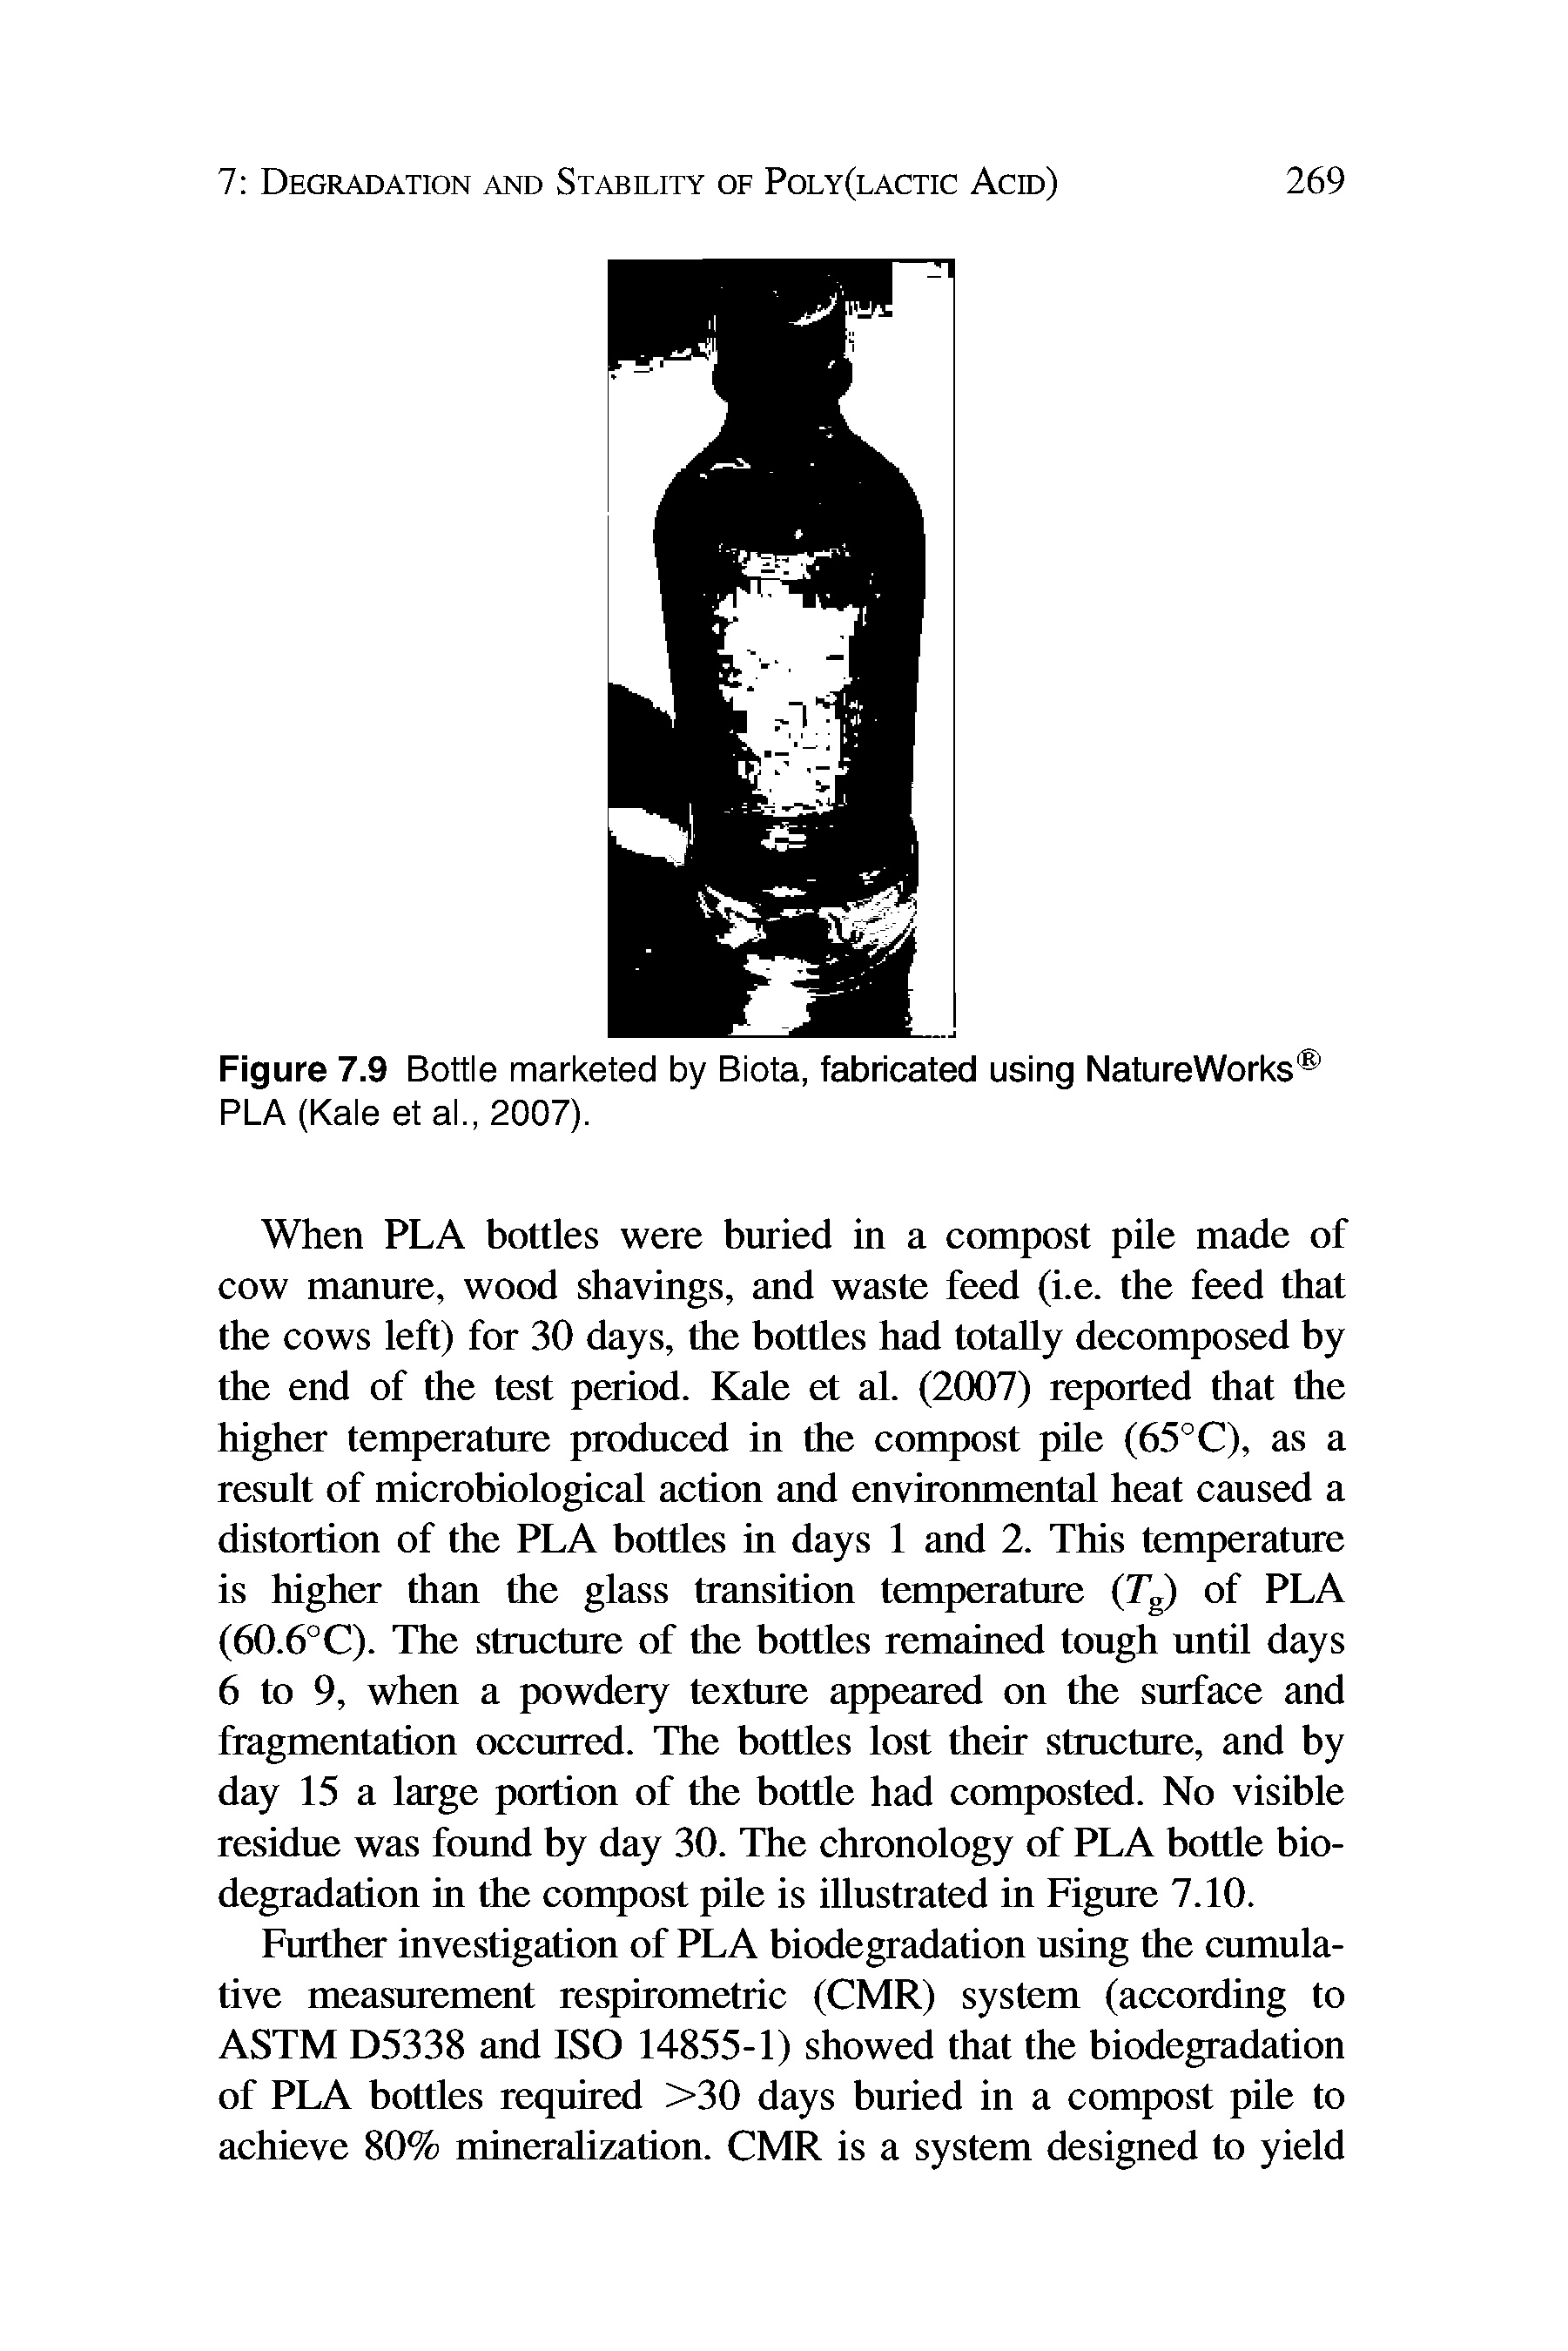 Figure 7.9 Bottle marketed by Biota, fabricated using NatureWorks PLA (Kale et al., 2007).